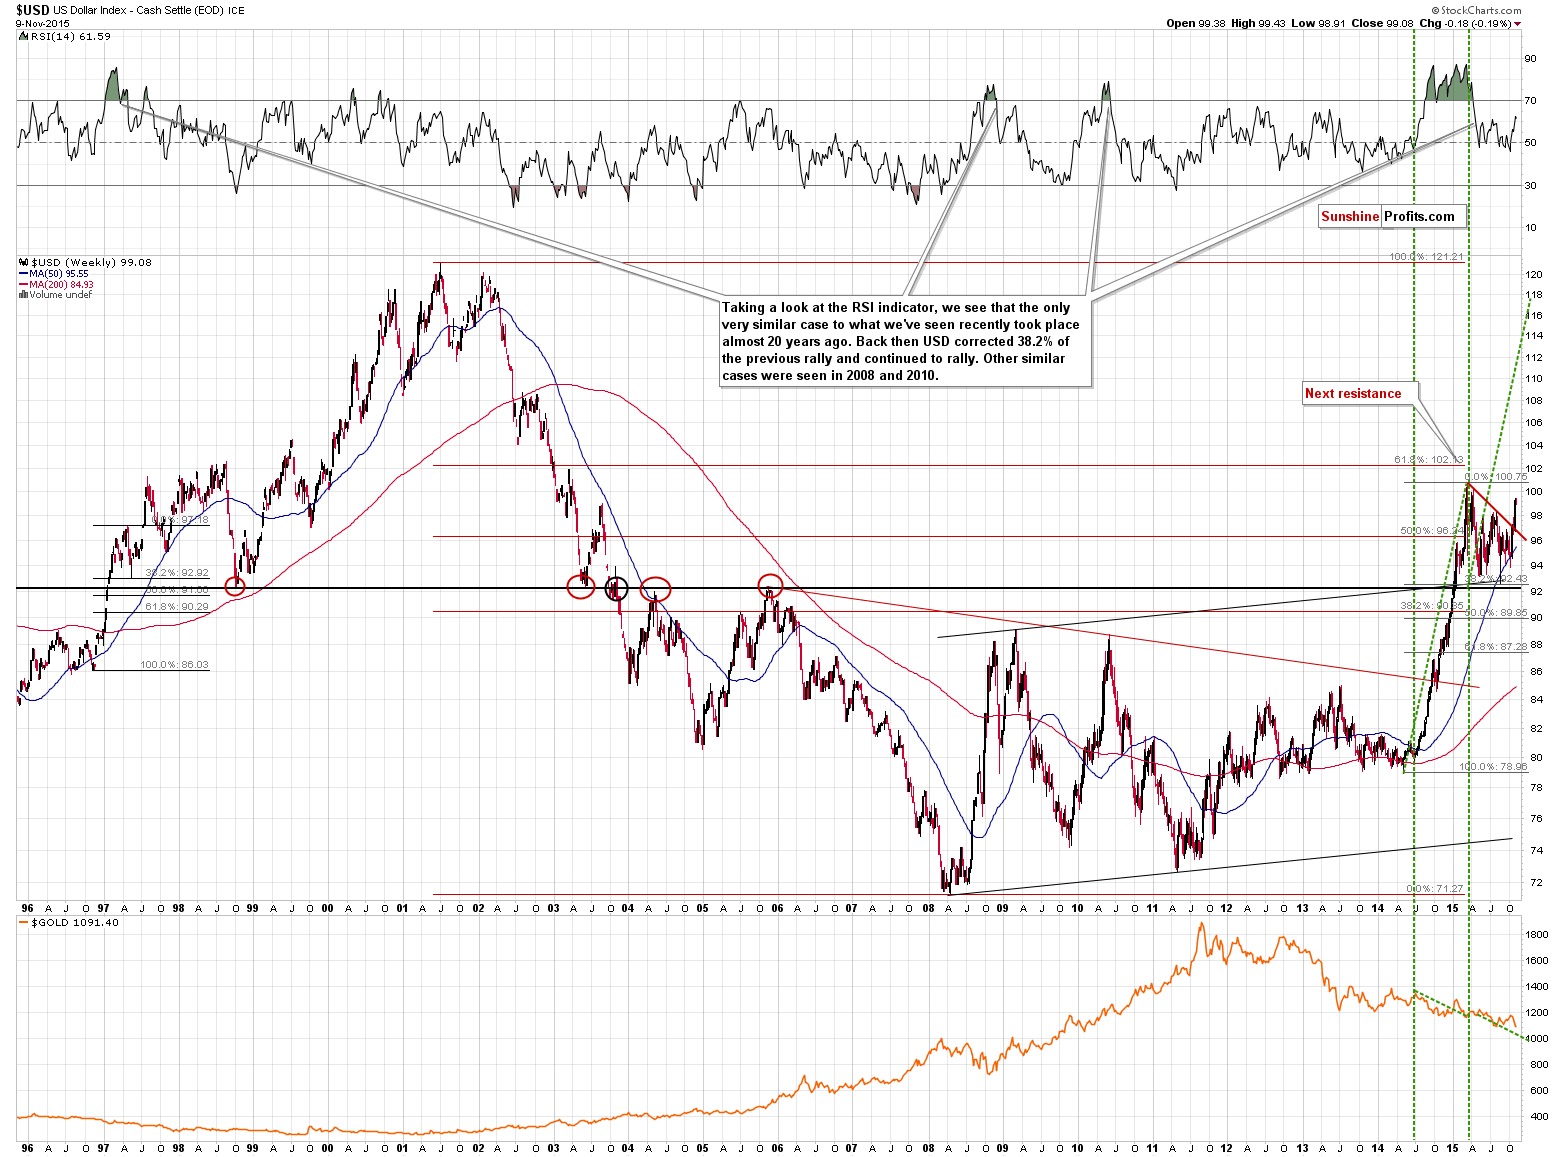 Long-term US Dollar price chart - USD